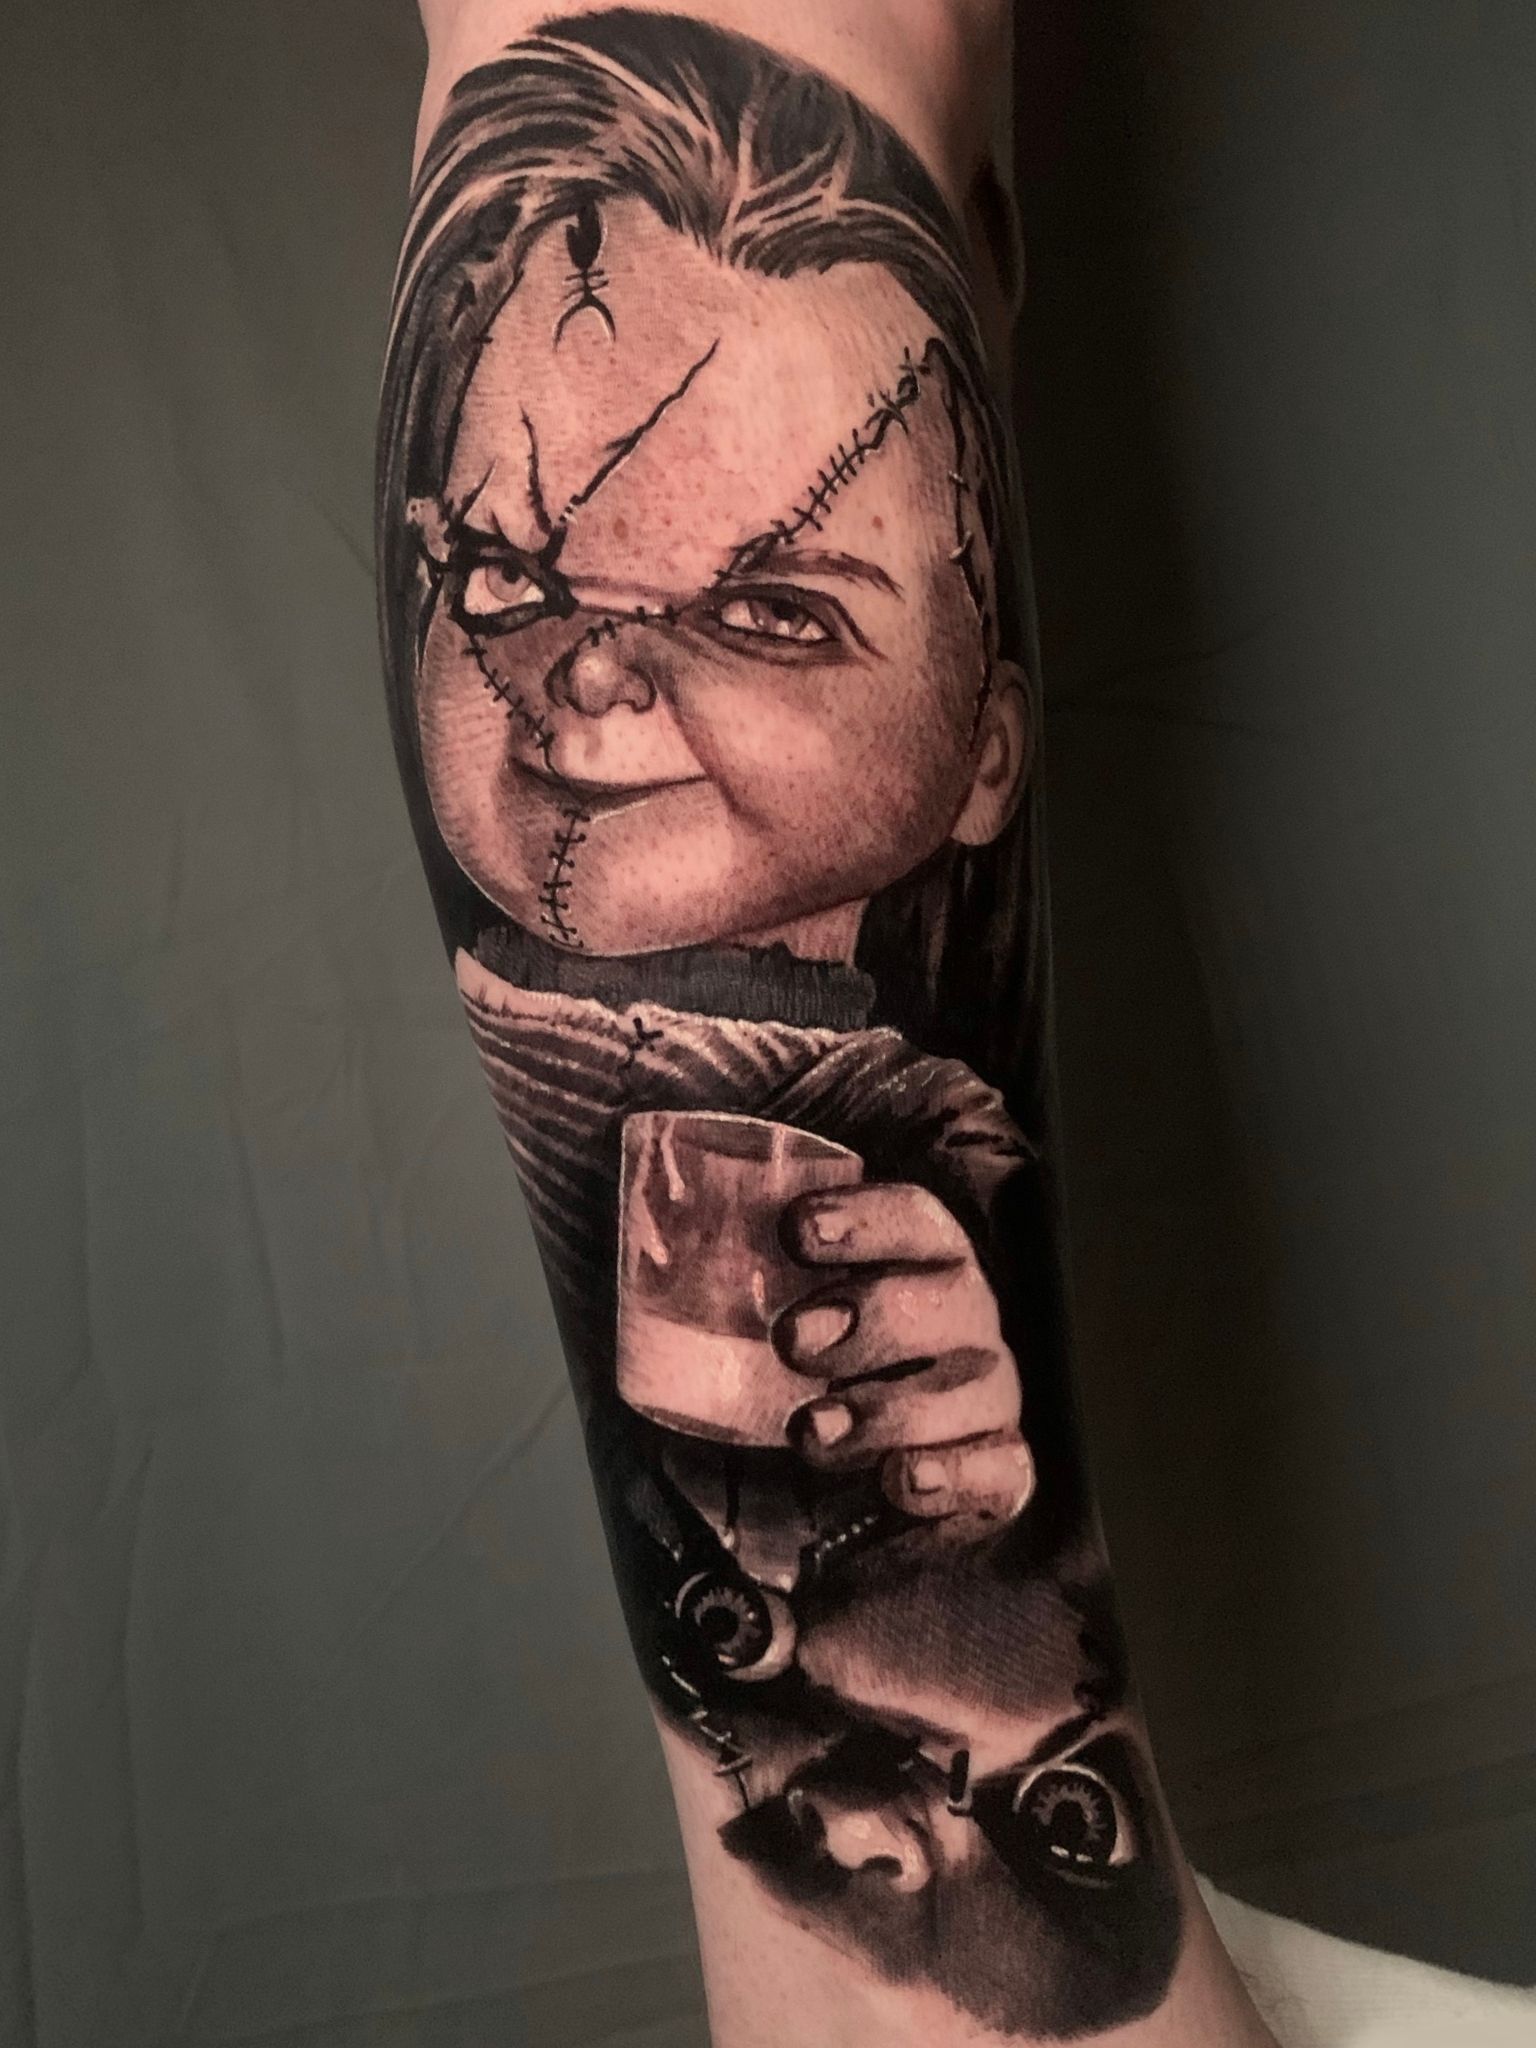 Chucky portrait to start of a horror themed leg sleeve chucky chuckydoll  horror slasher movies evil killer charlesleeray  Instagram